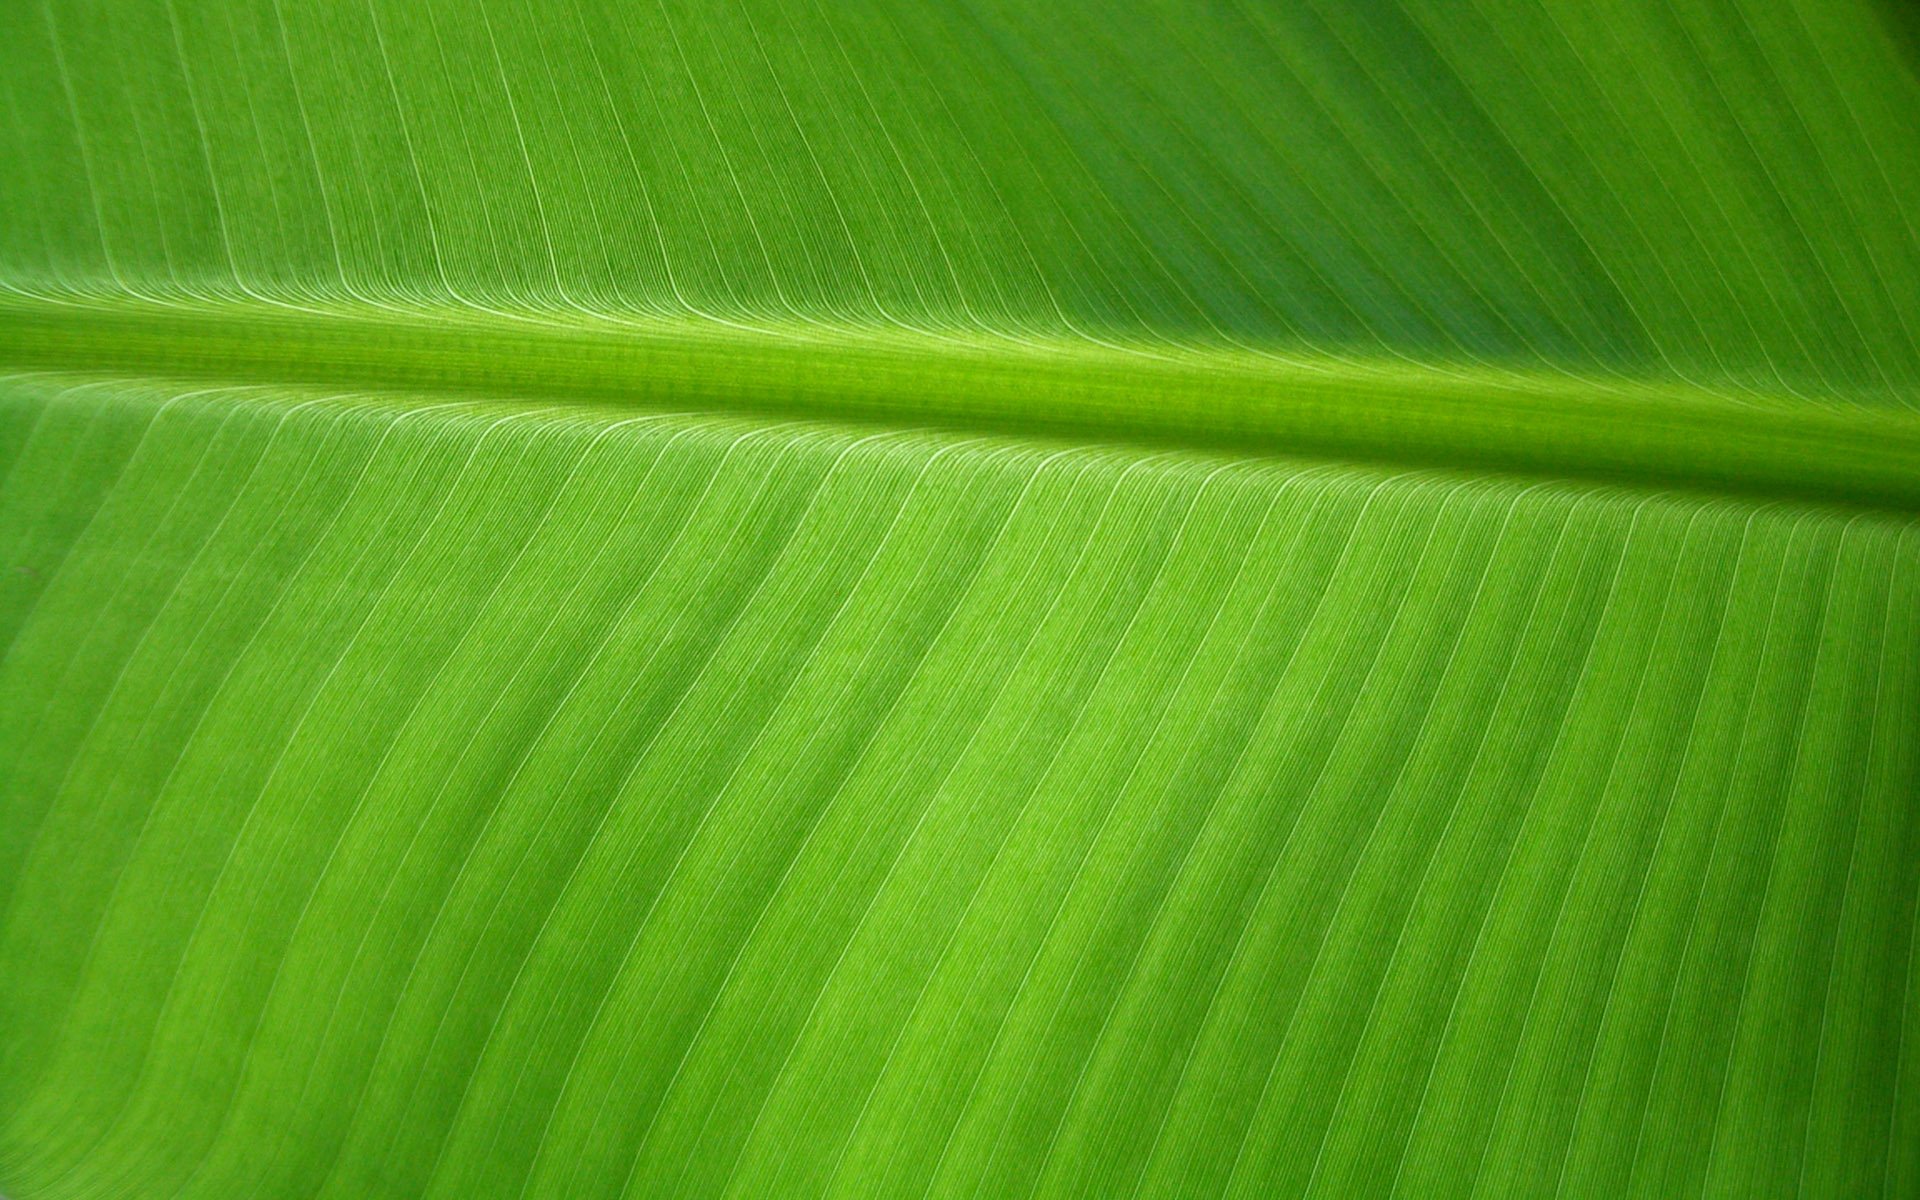 Banana Leaf by OrodrethC 1920x1200